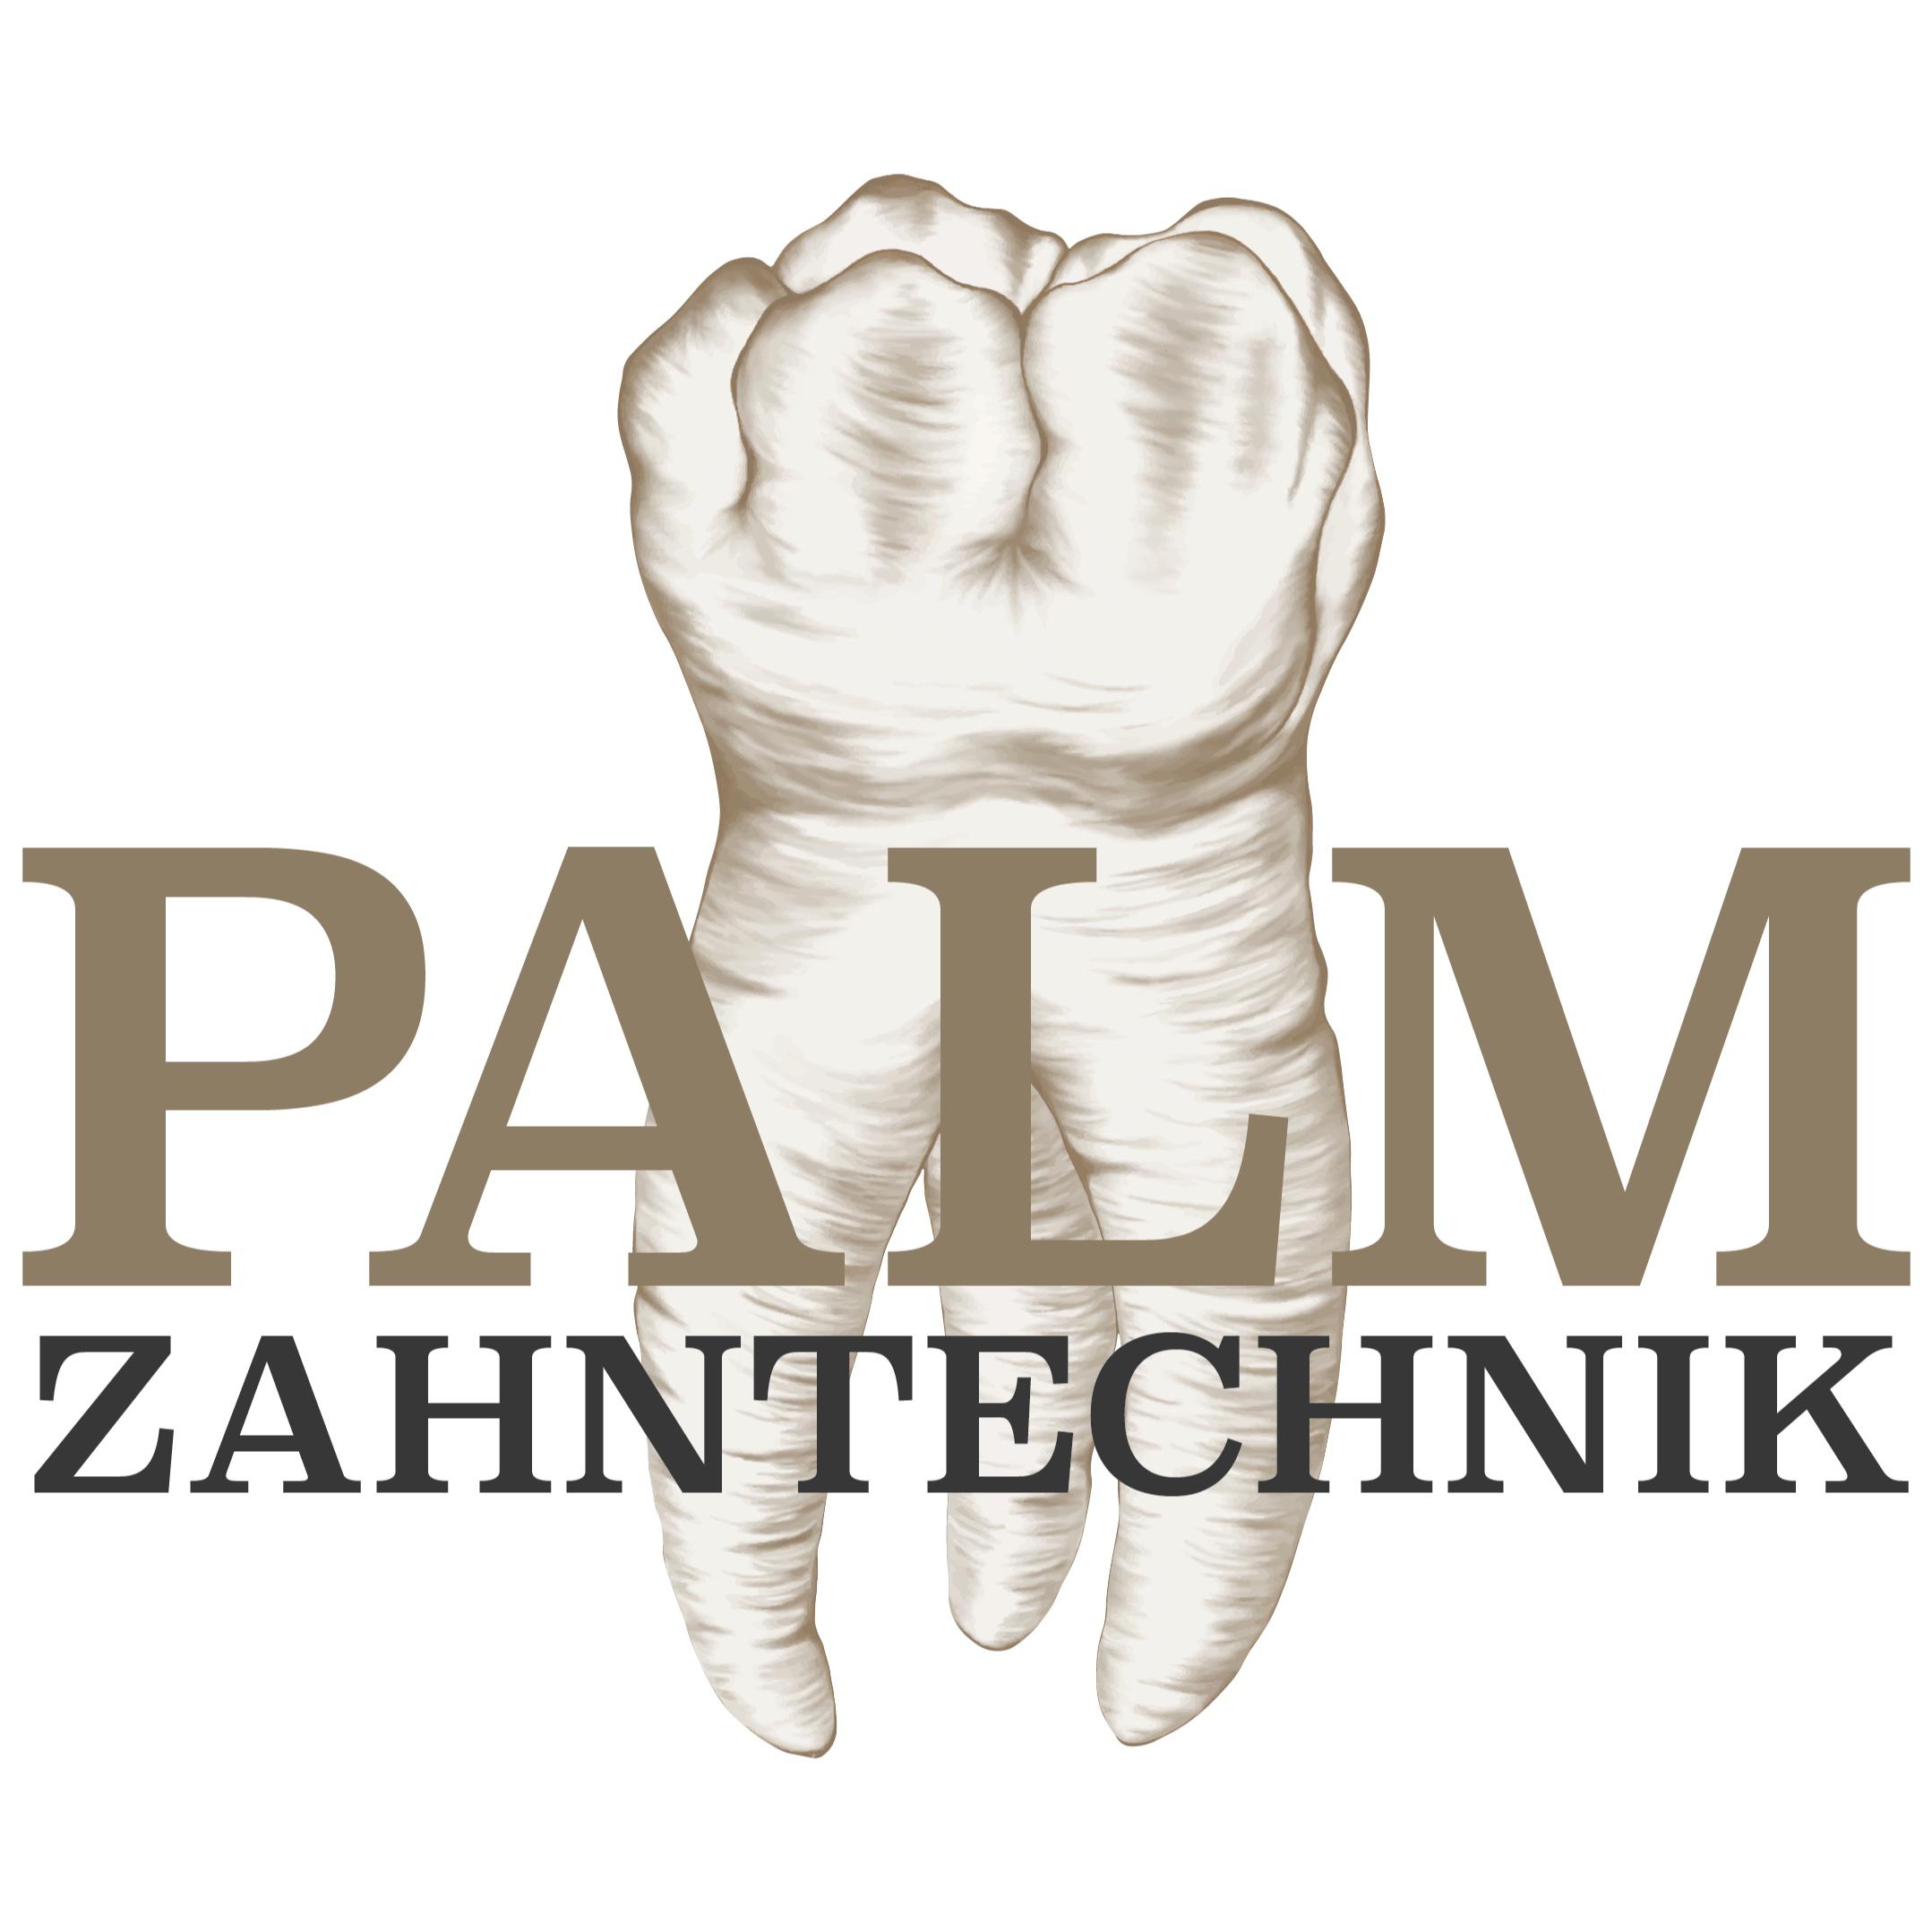 Palm Zahntechnik Inh. Sebastian Palm  